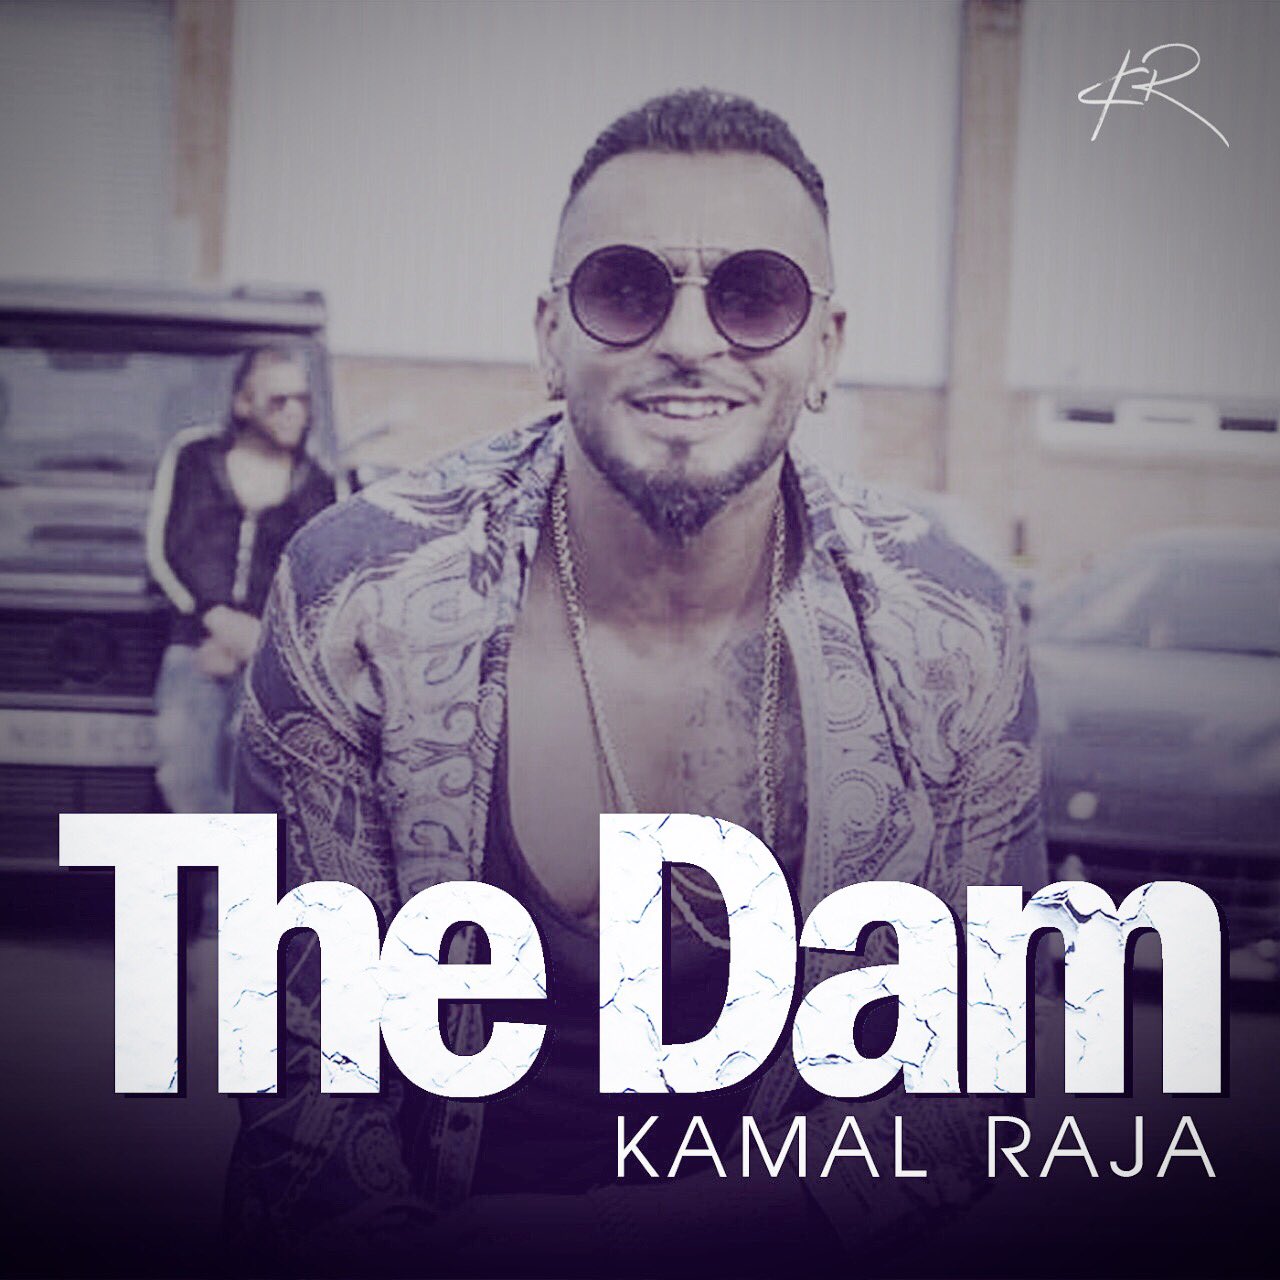 L.A.M - Single - Album by Kamal Raja - Apple Music